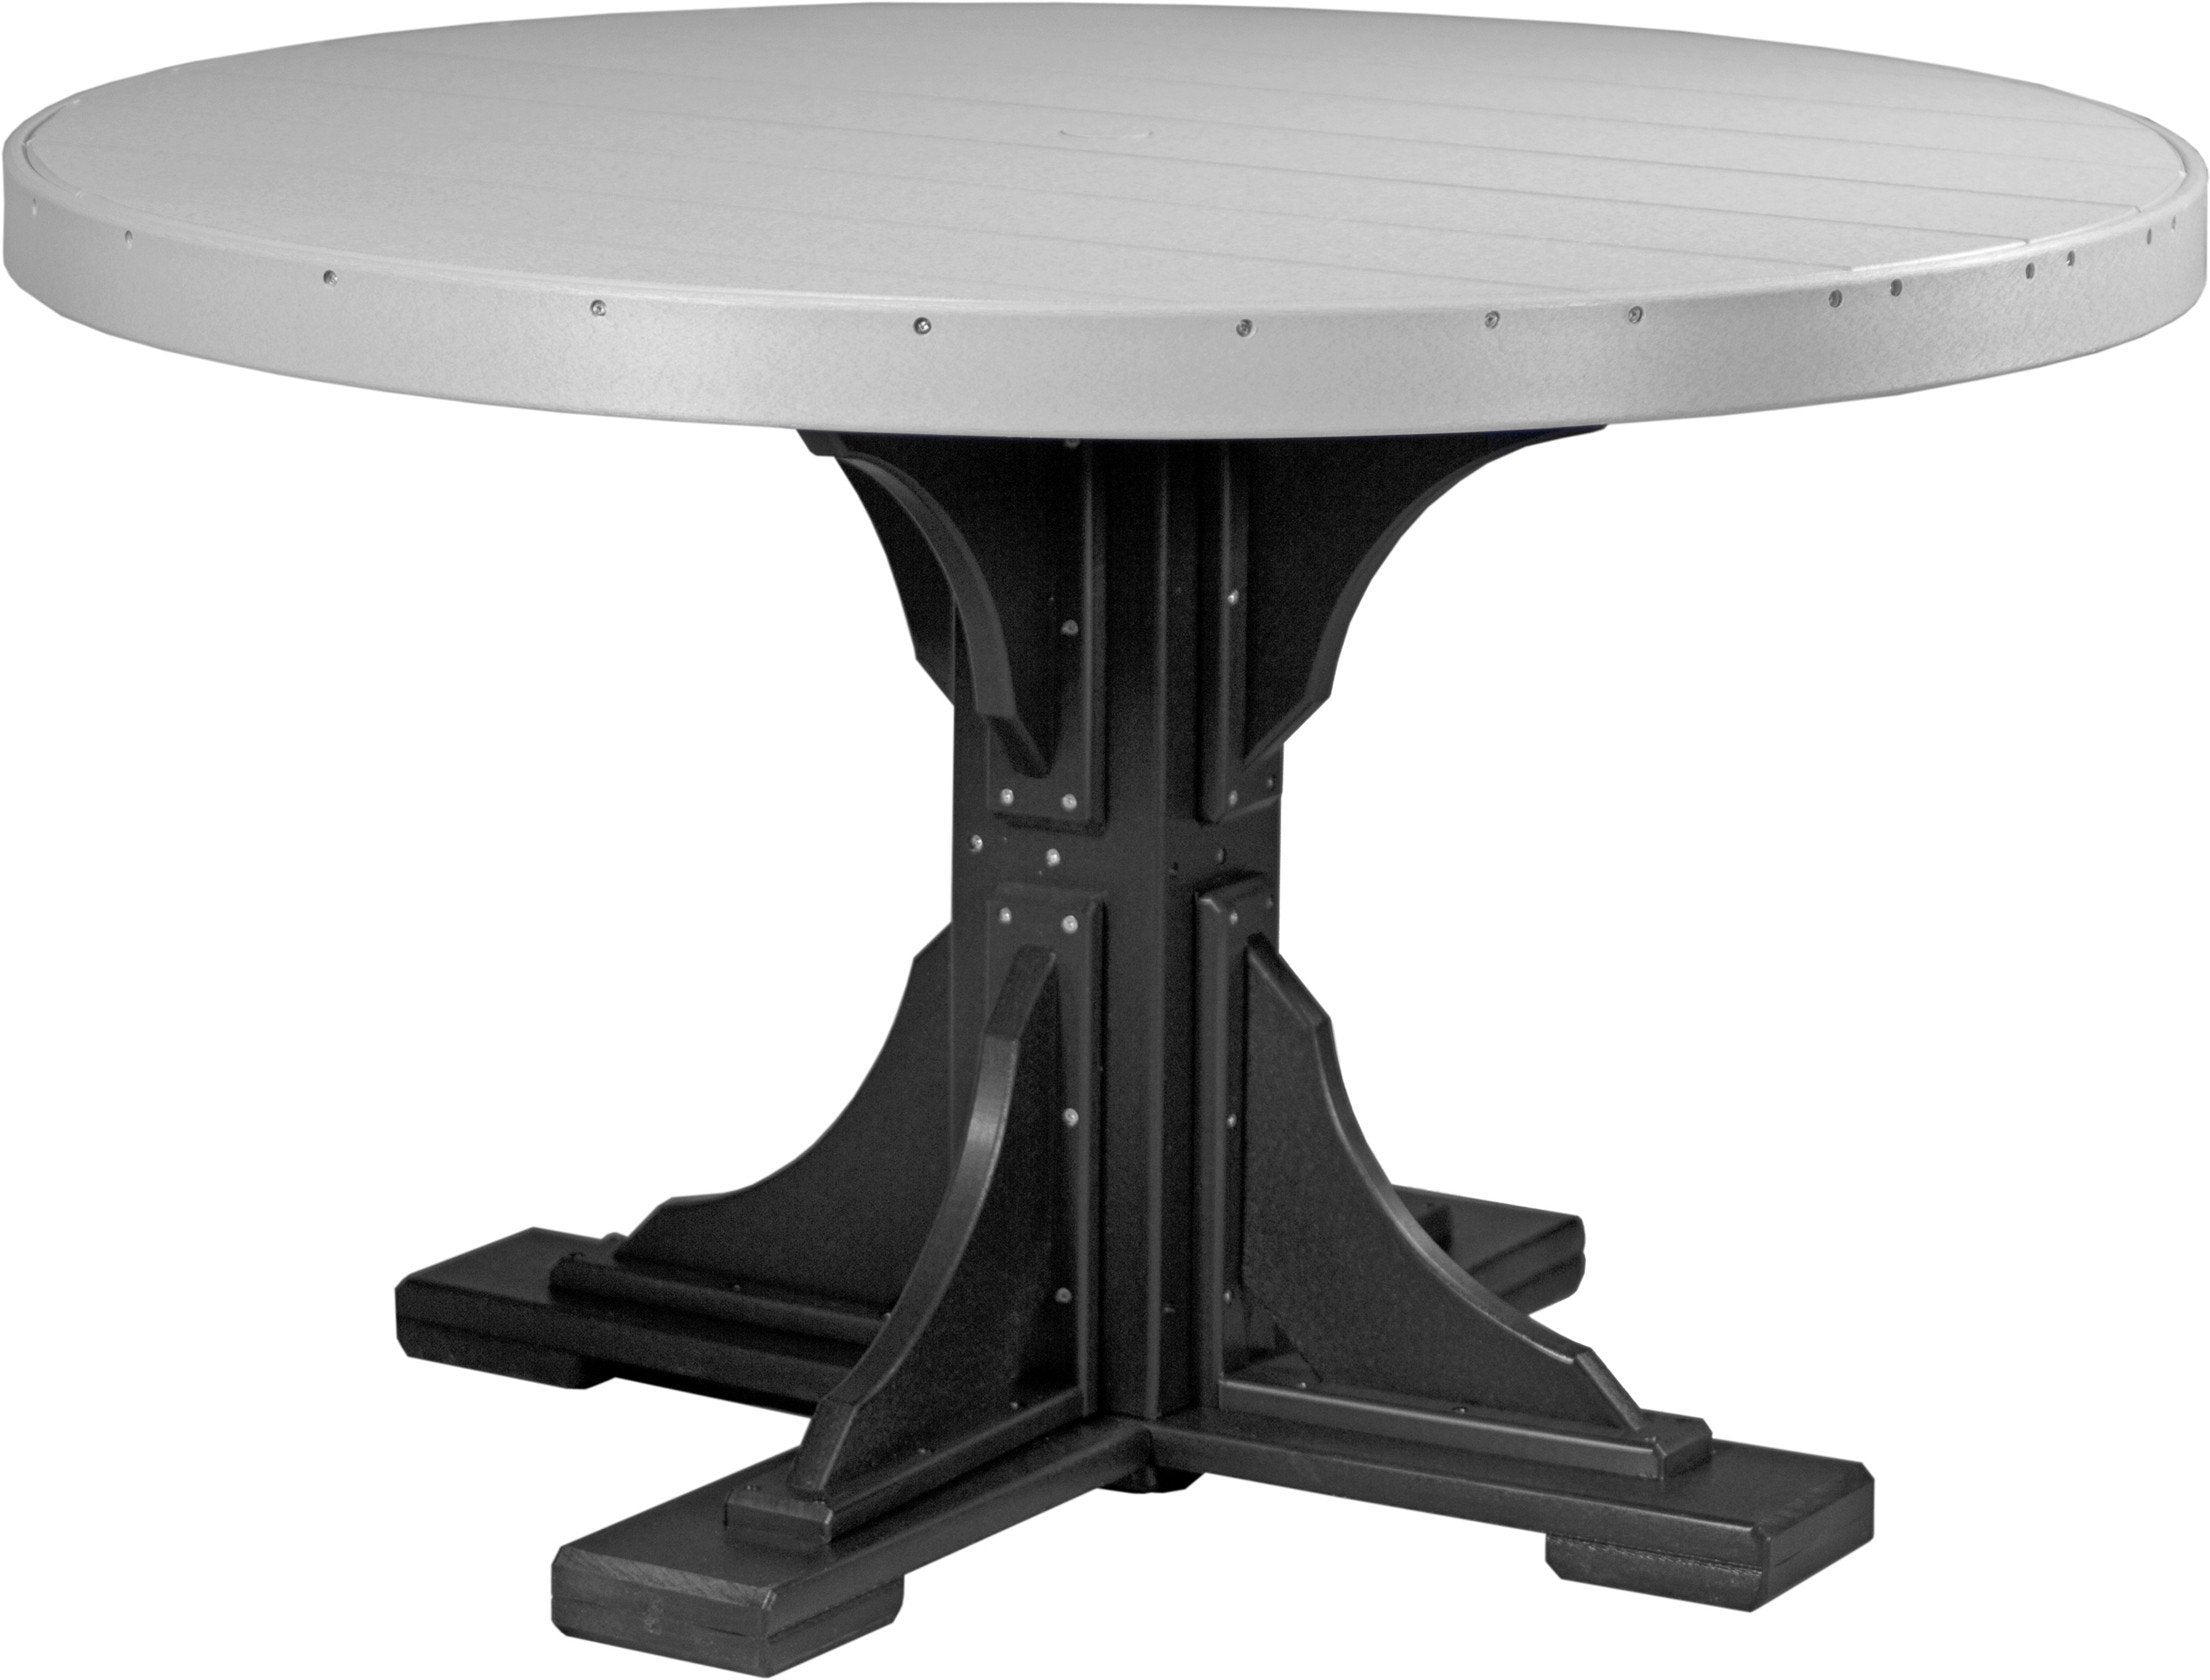 Luxcraft PolyTuf 4' Round Table